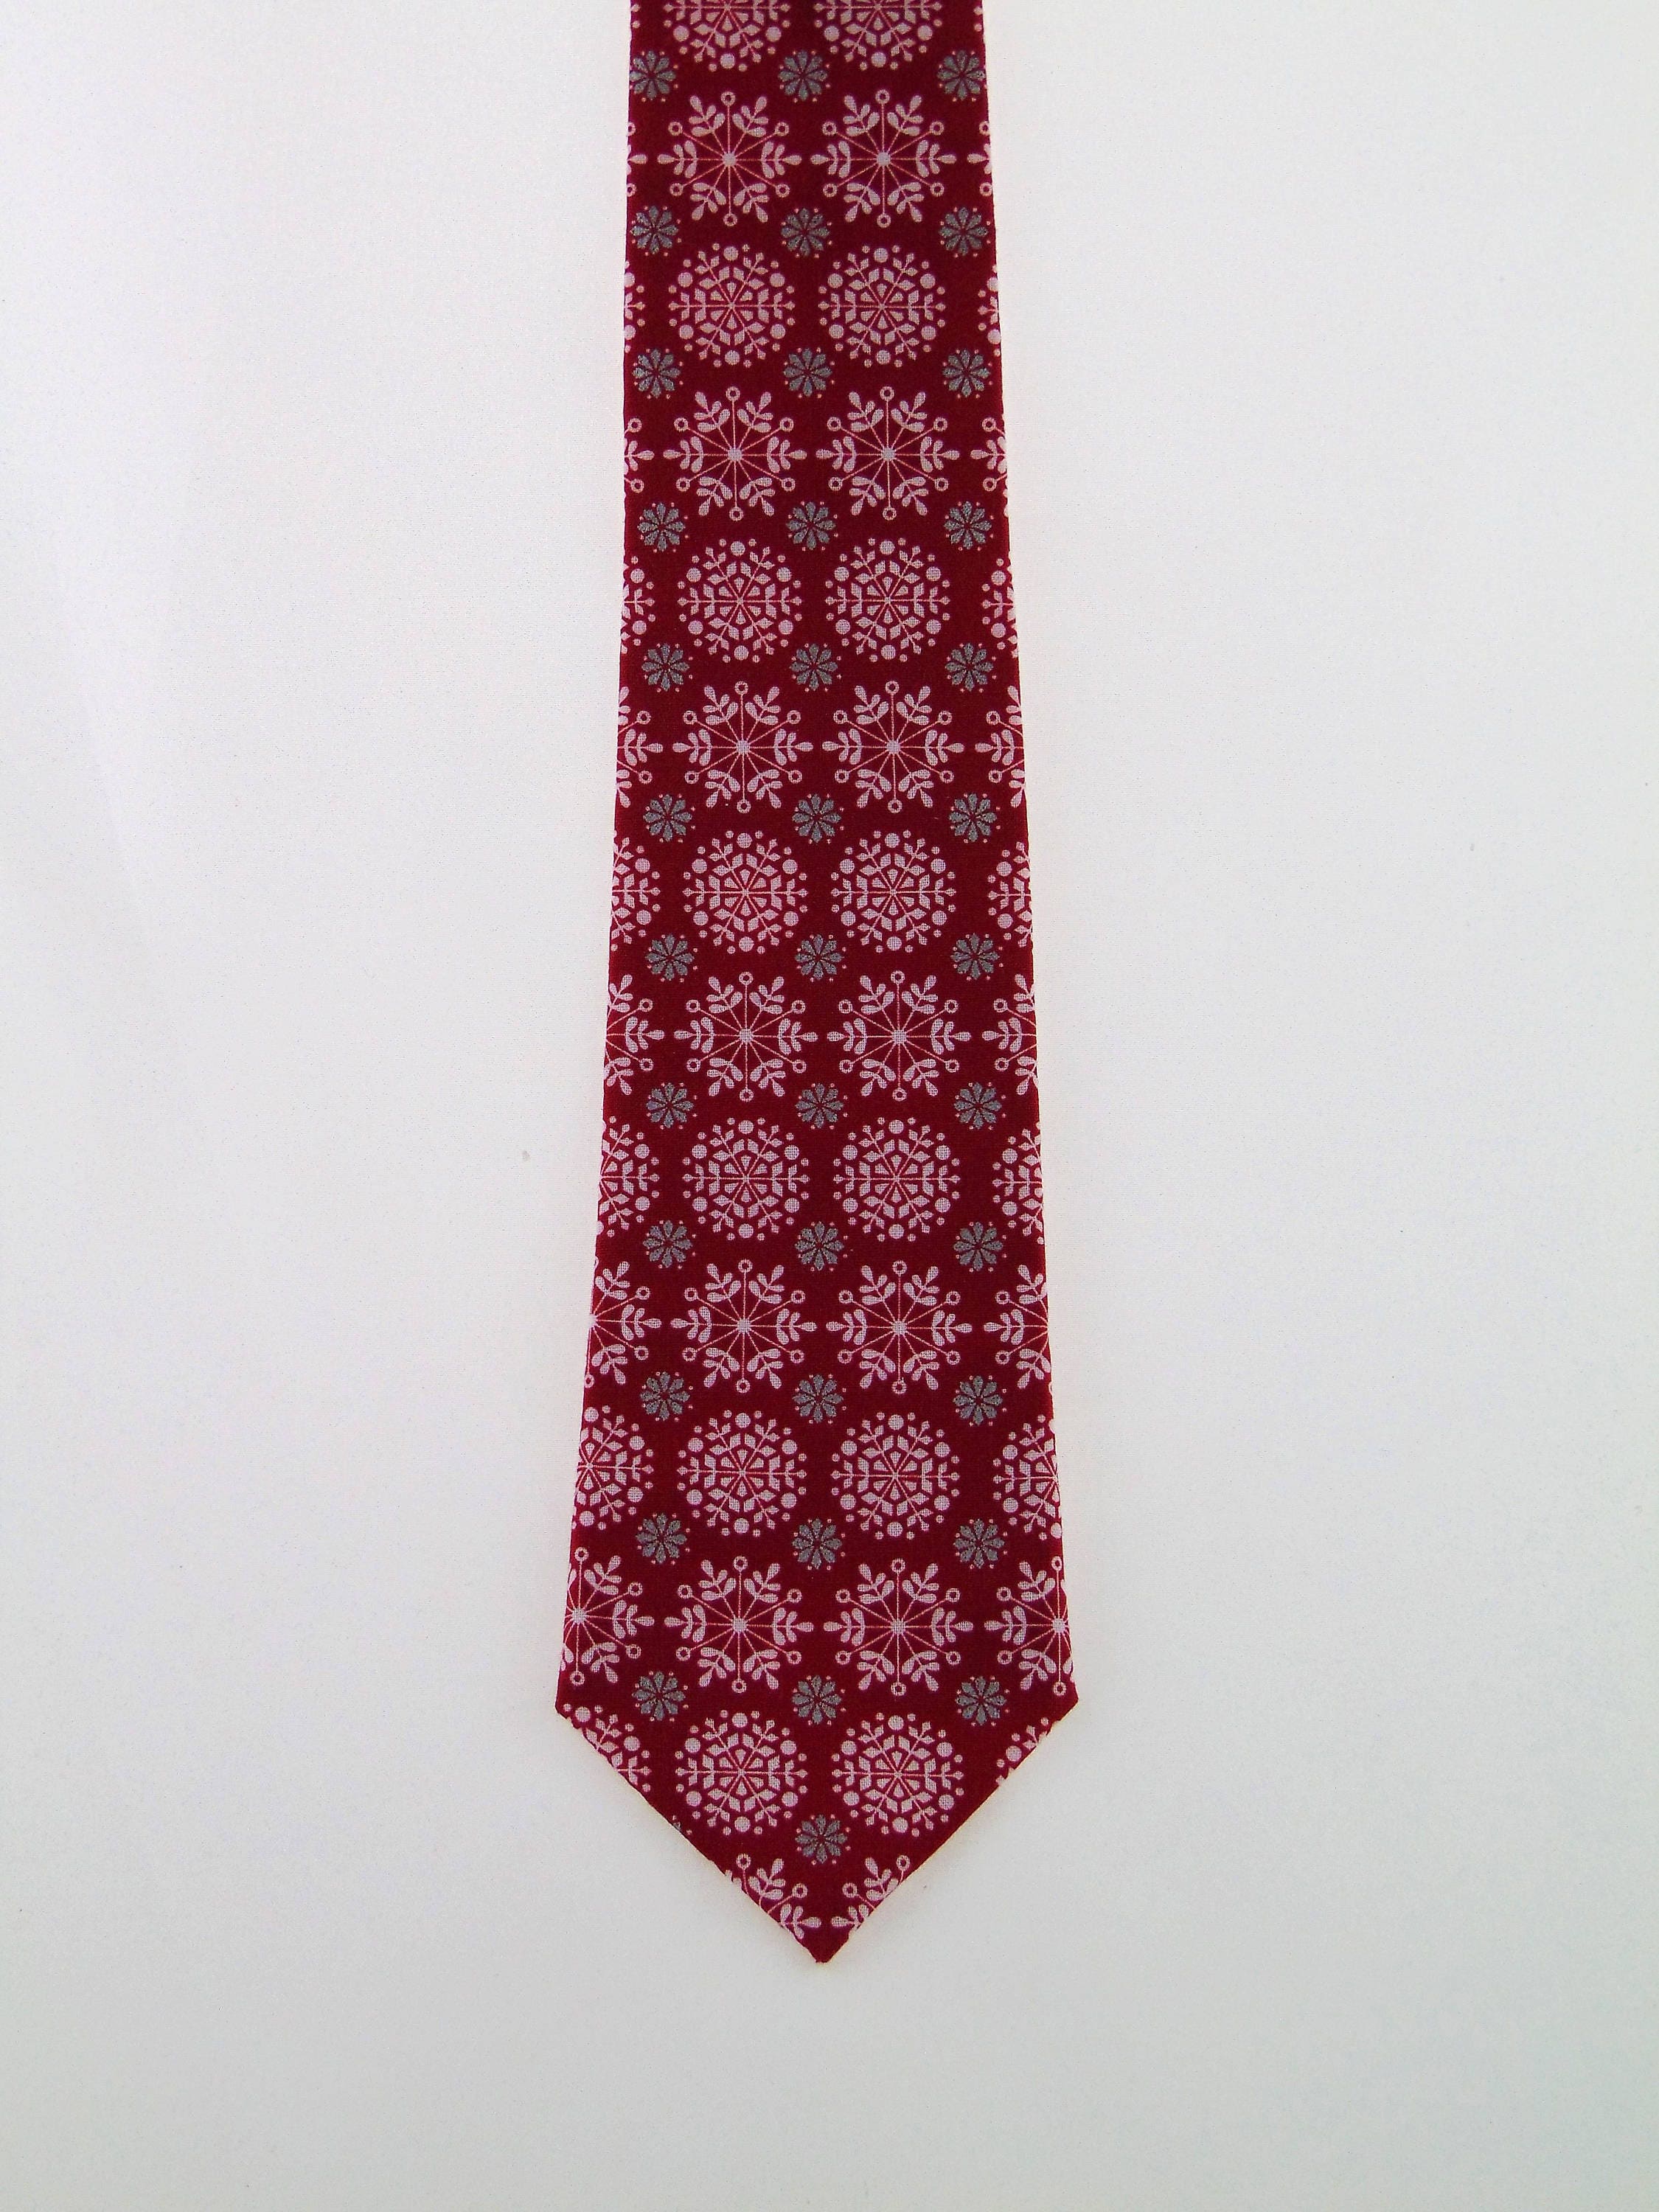 Snowflake Neck Tie – Mens Burgundy Christmas Tie. Available as a Skinny ...